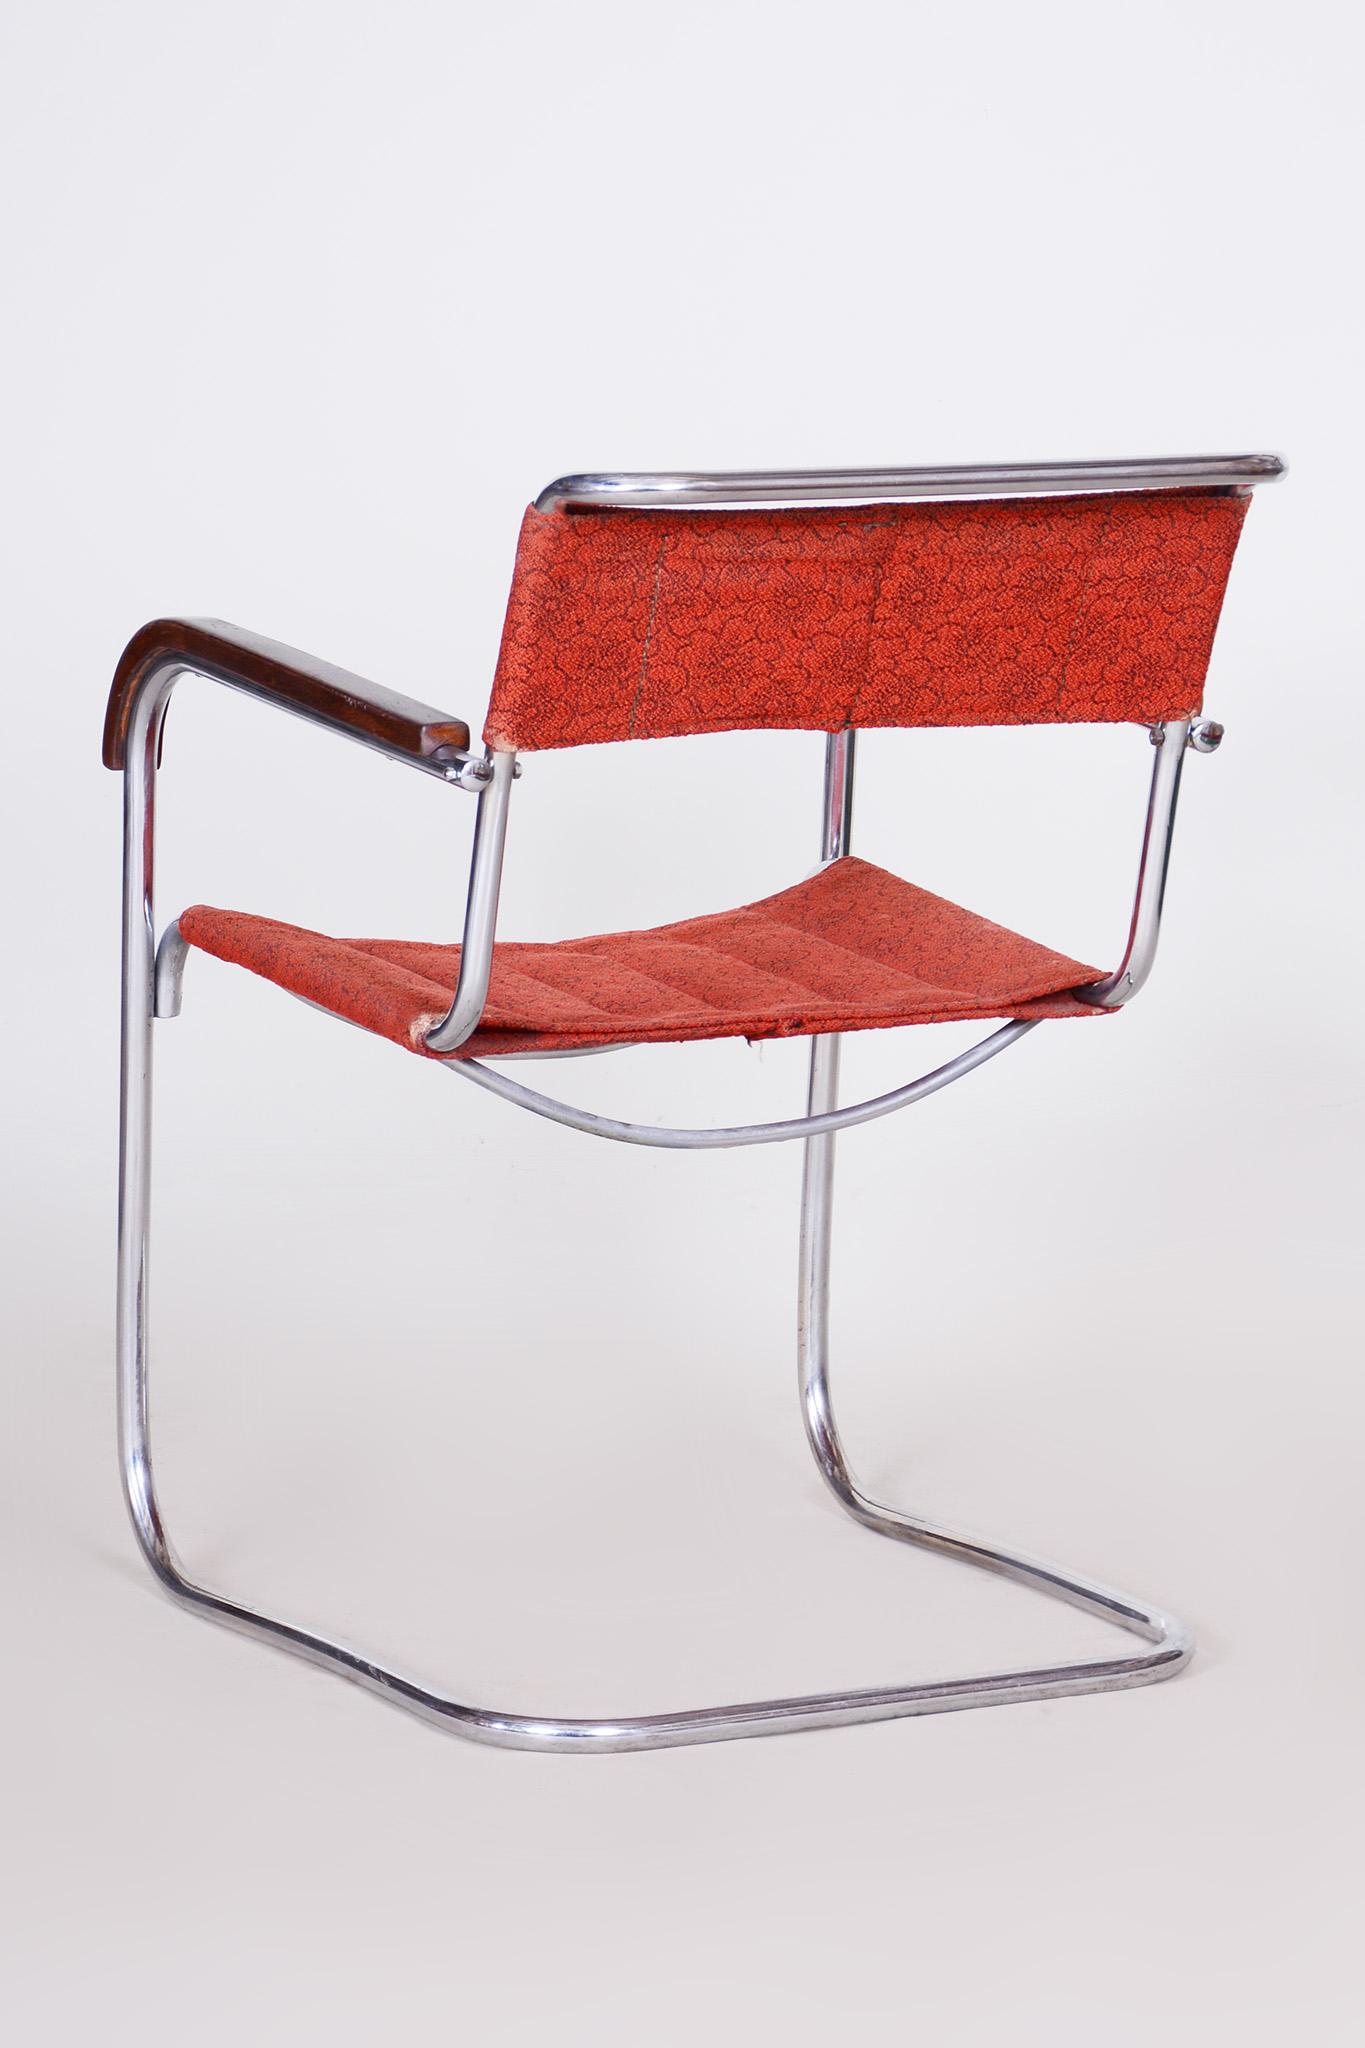 Red Bauhaus Armchair by Marcel Breuer, Mücke, Melder, Beech, Chrome, 1930s For Sale 4